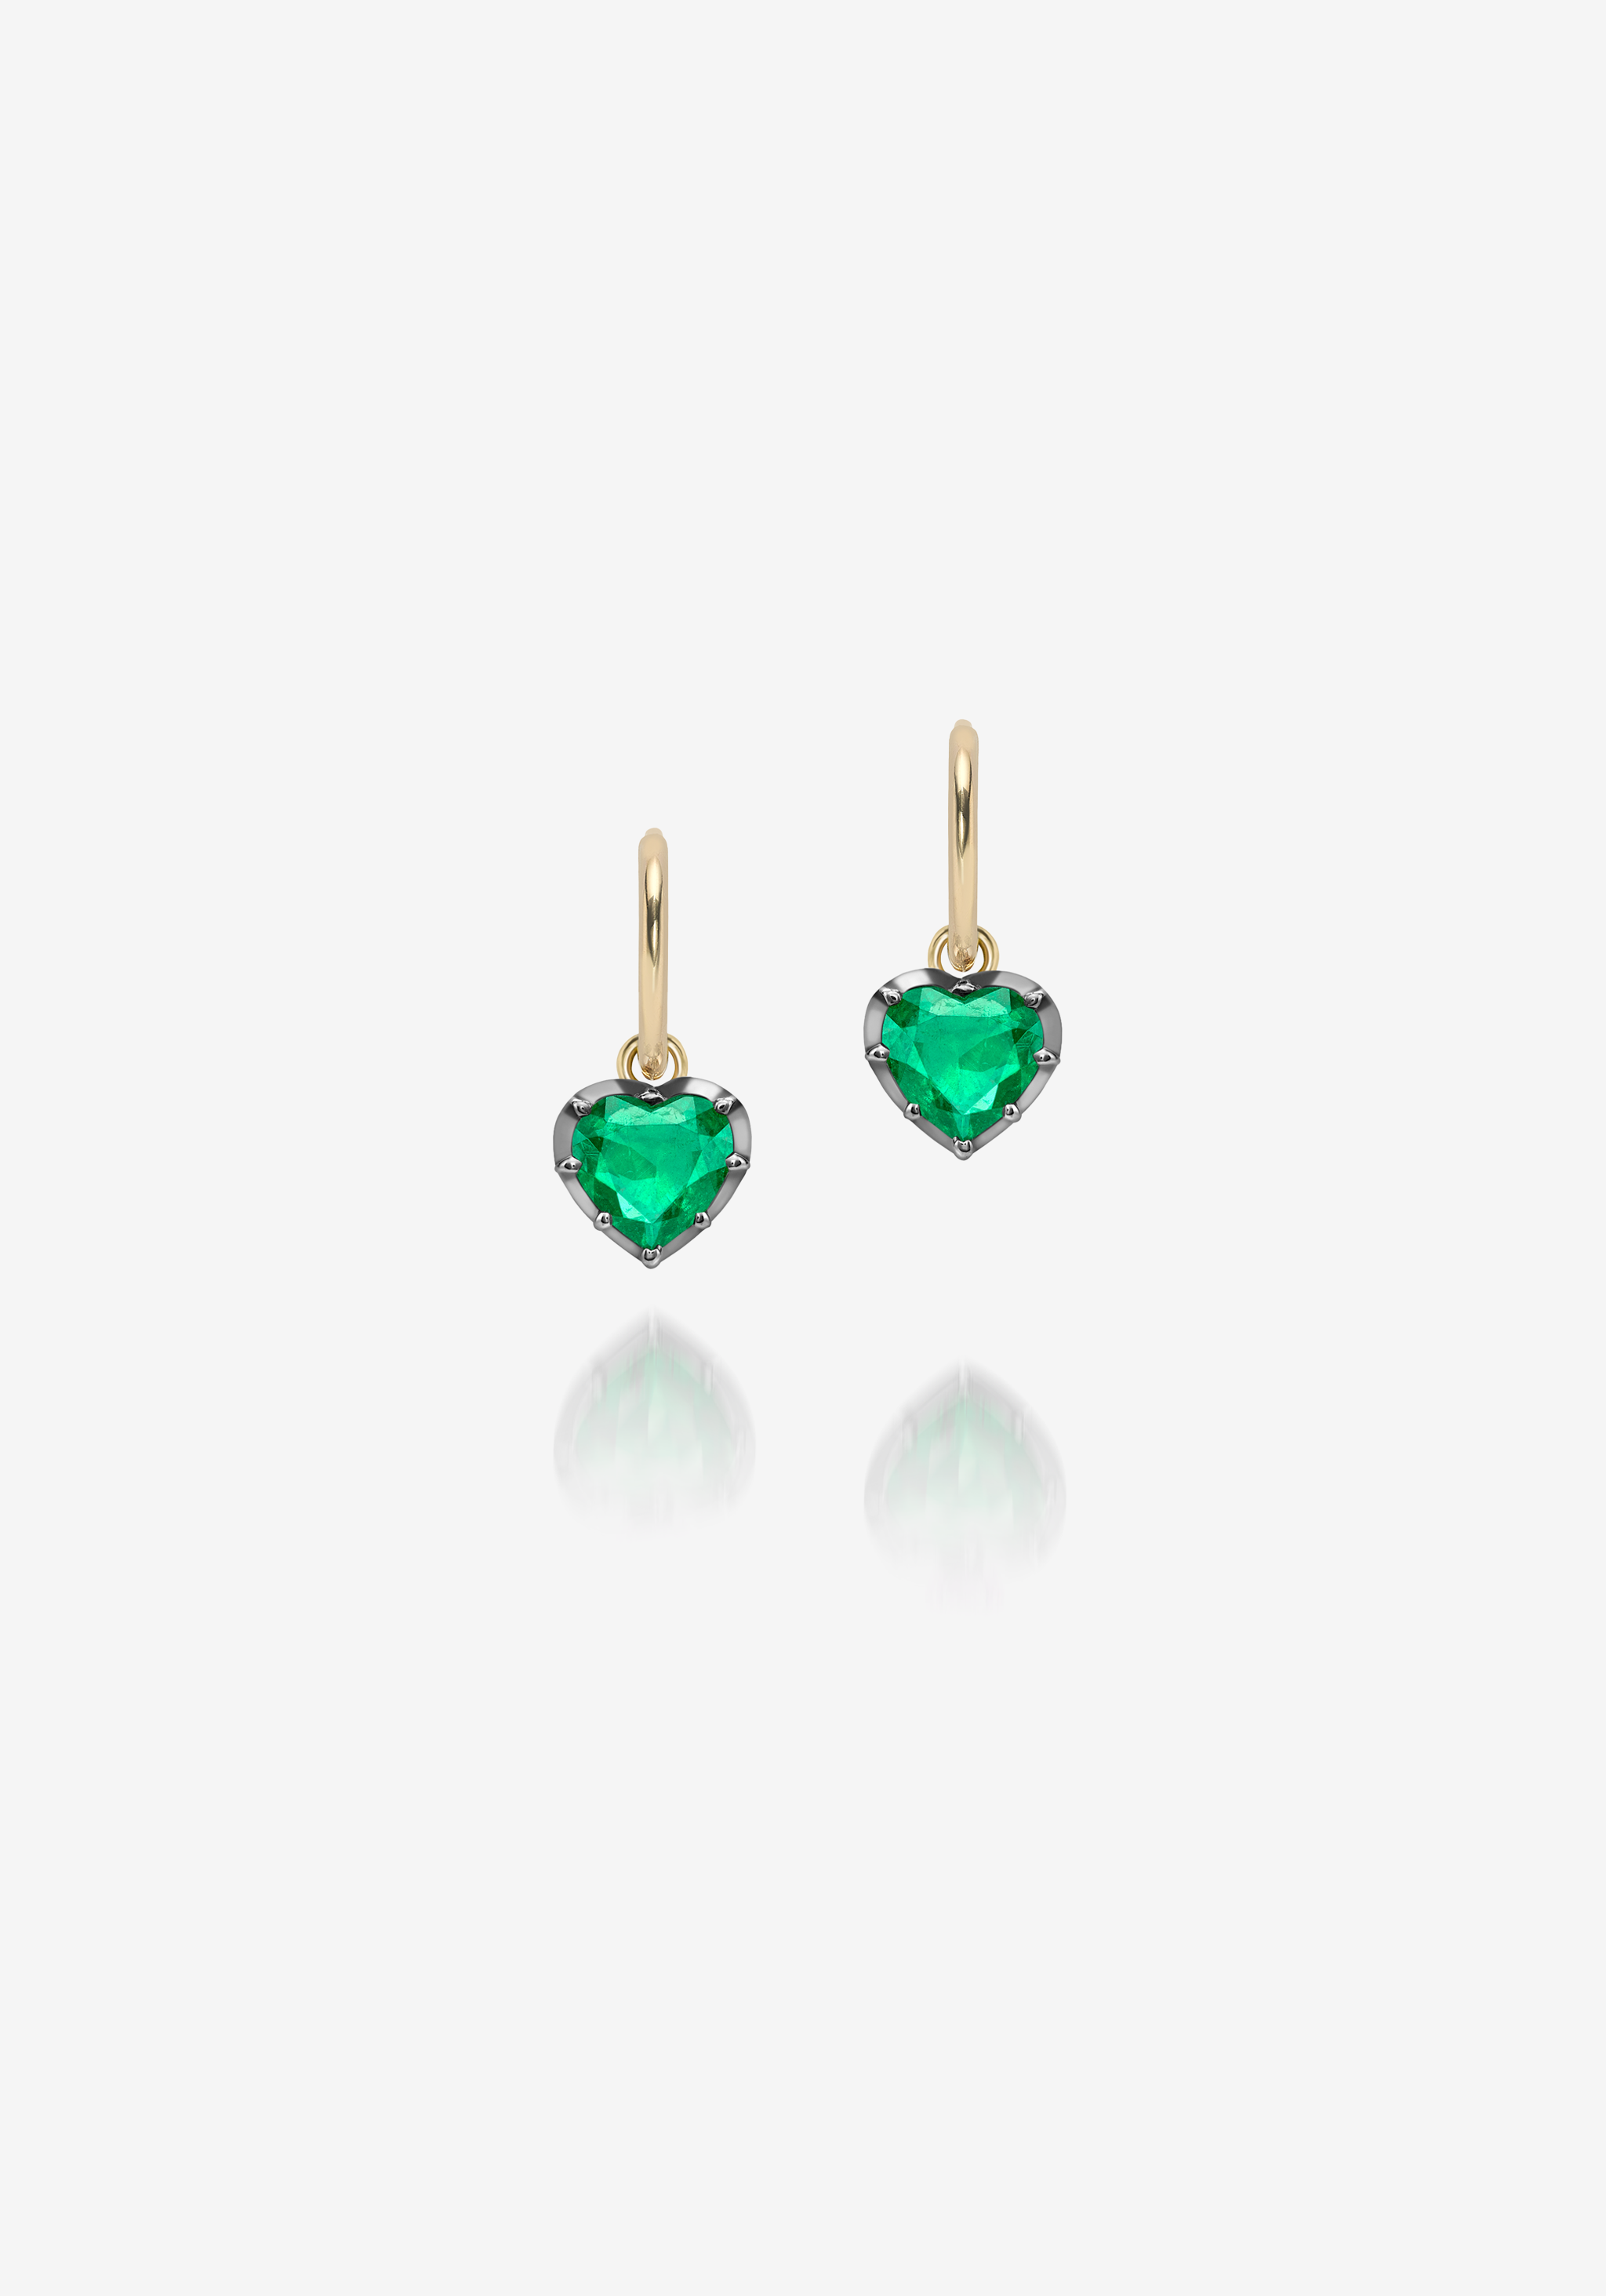 Signature Emerald Gypsets - 0.90ct Heart Shaped